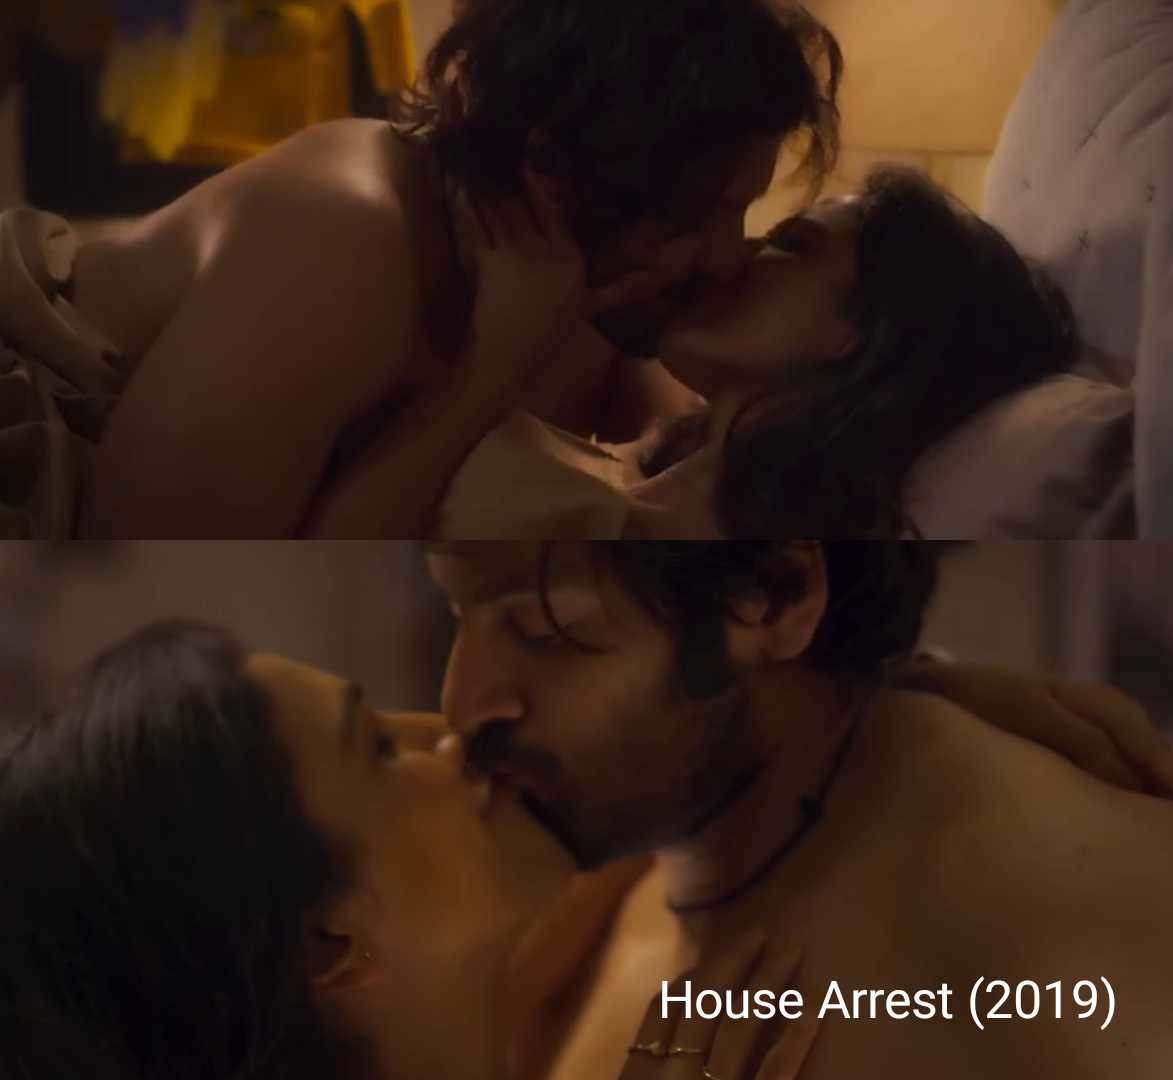 Shriya Pilgaonkar multiple kissing scenes with co-actor ali fazal in movie House Arrest (2019) on Netflix